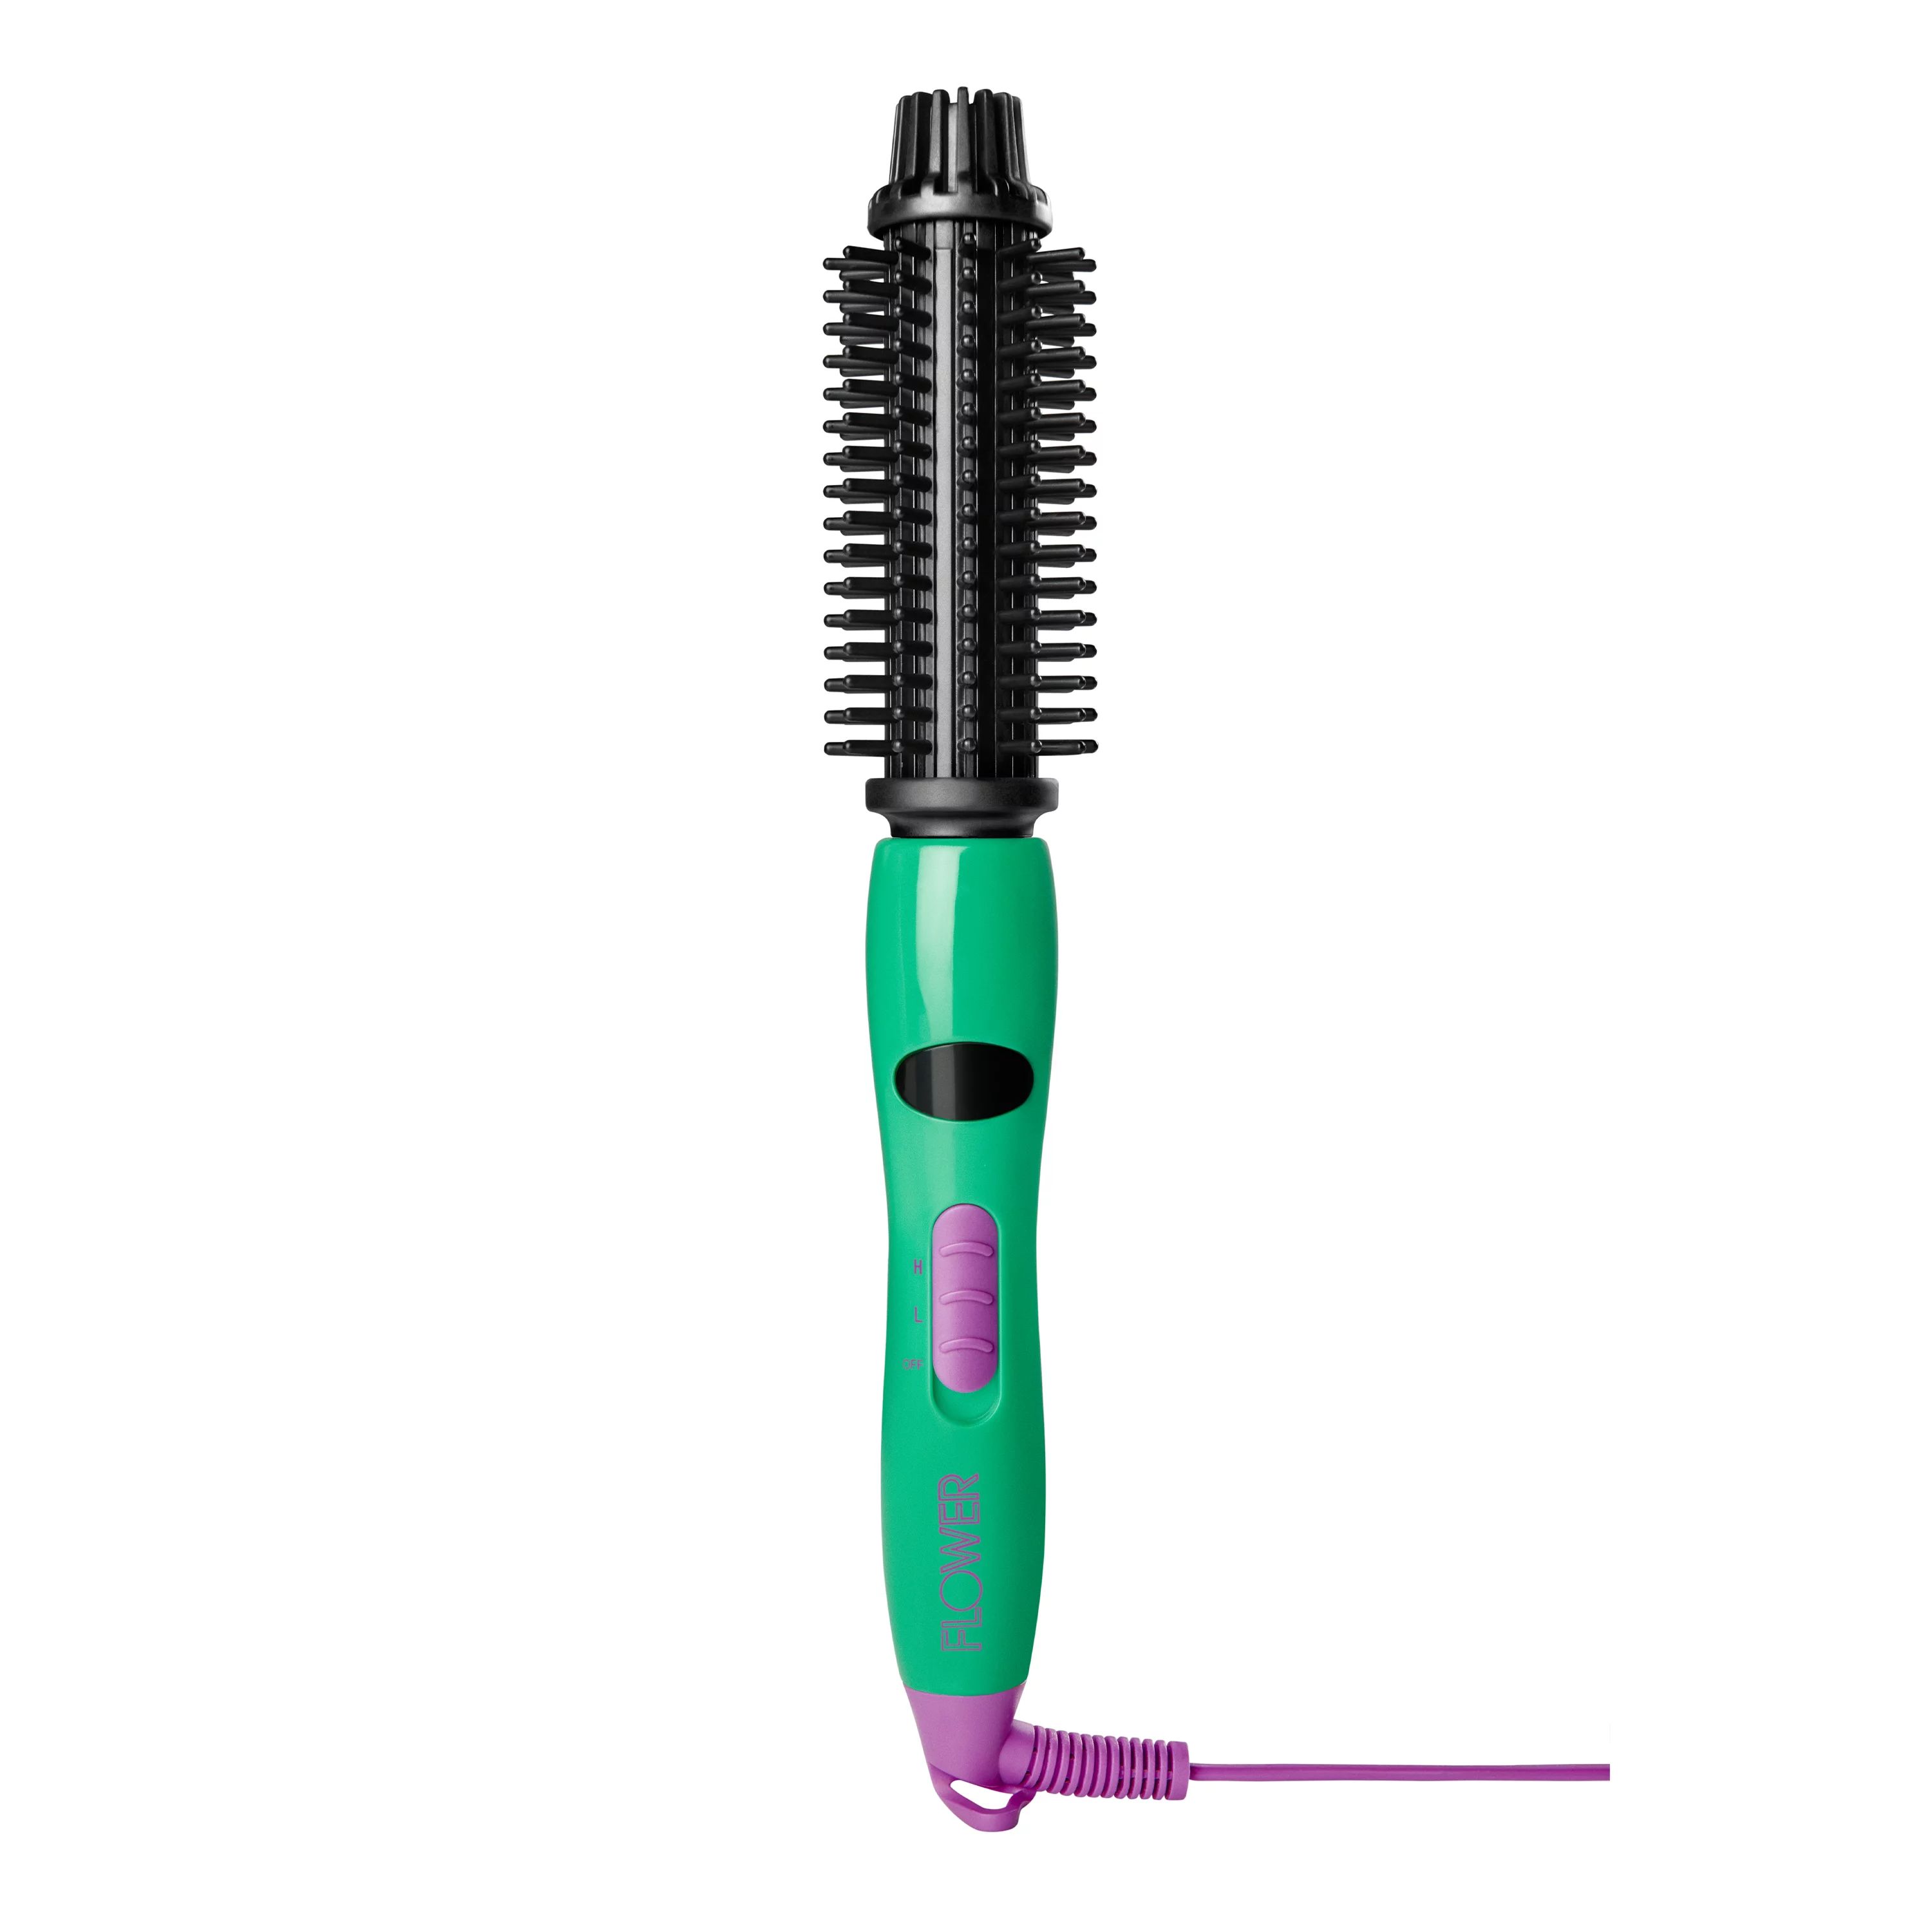 FLOWER Ionic 1" Volumizing Styling Hot Brush, Green and Pink | Walmart (US)